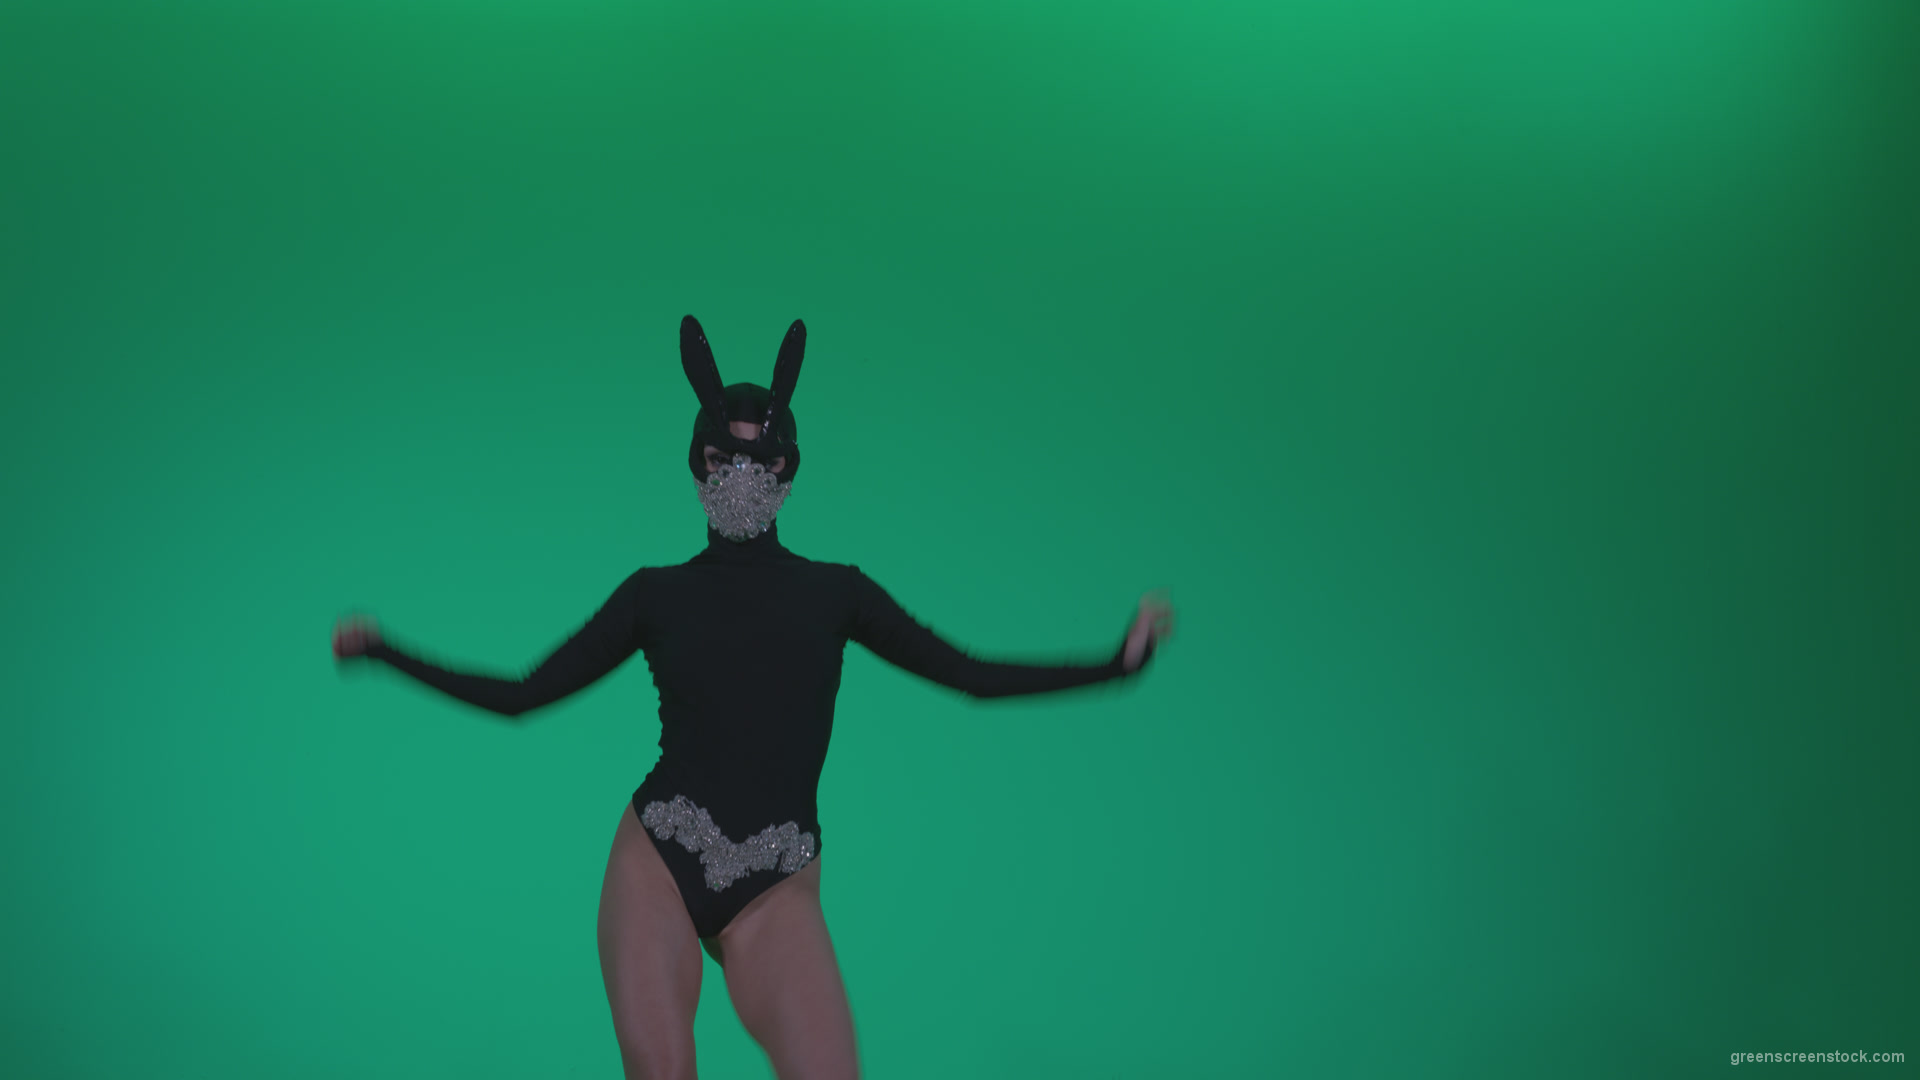 Go-go-Dancer-Black-Rabbit-u13-Green-Screen-Video-Footage_007 Green Screen Stock